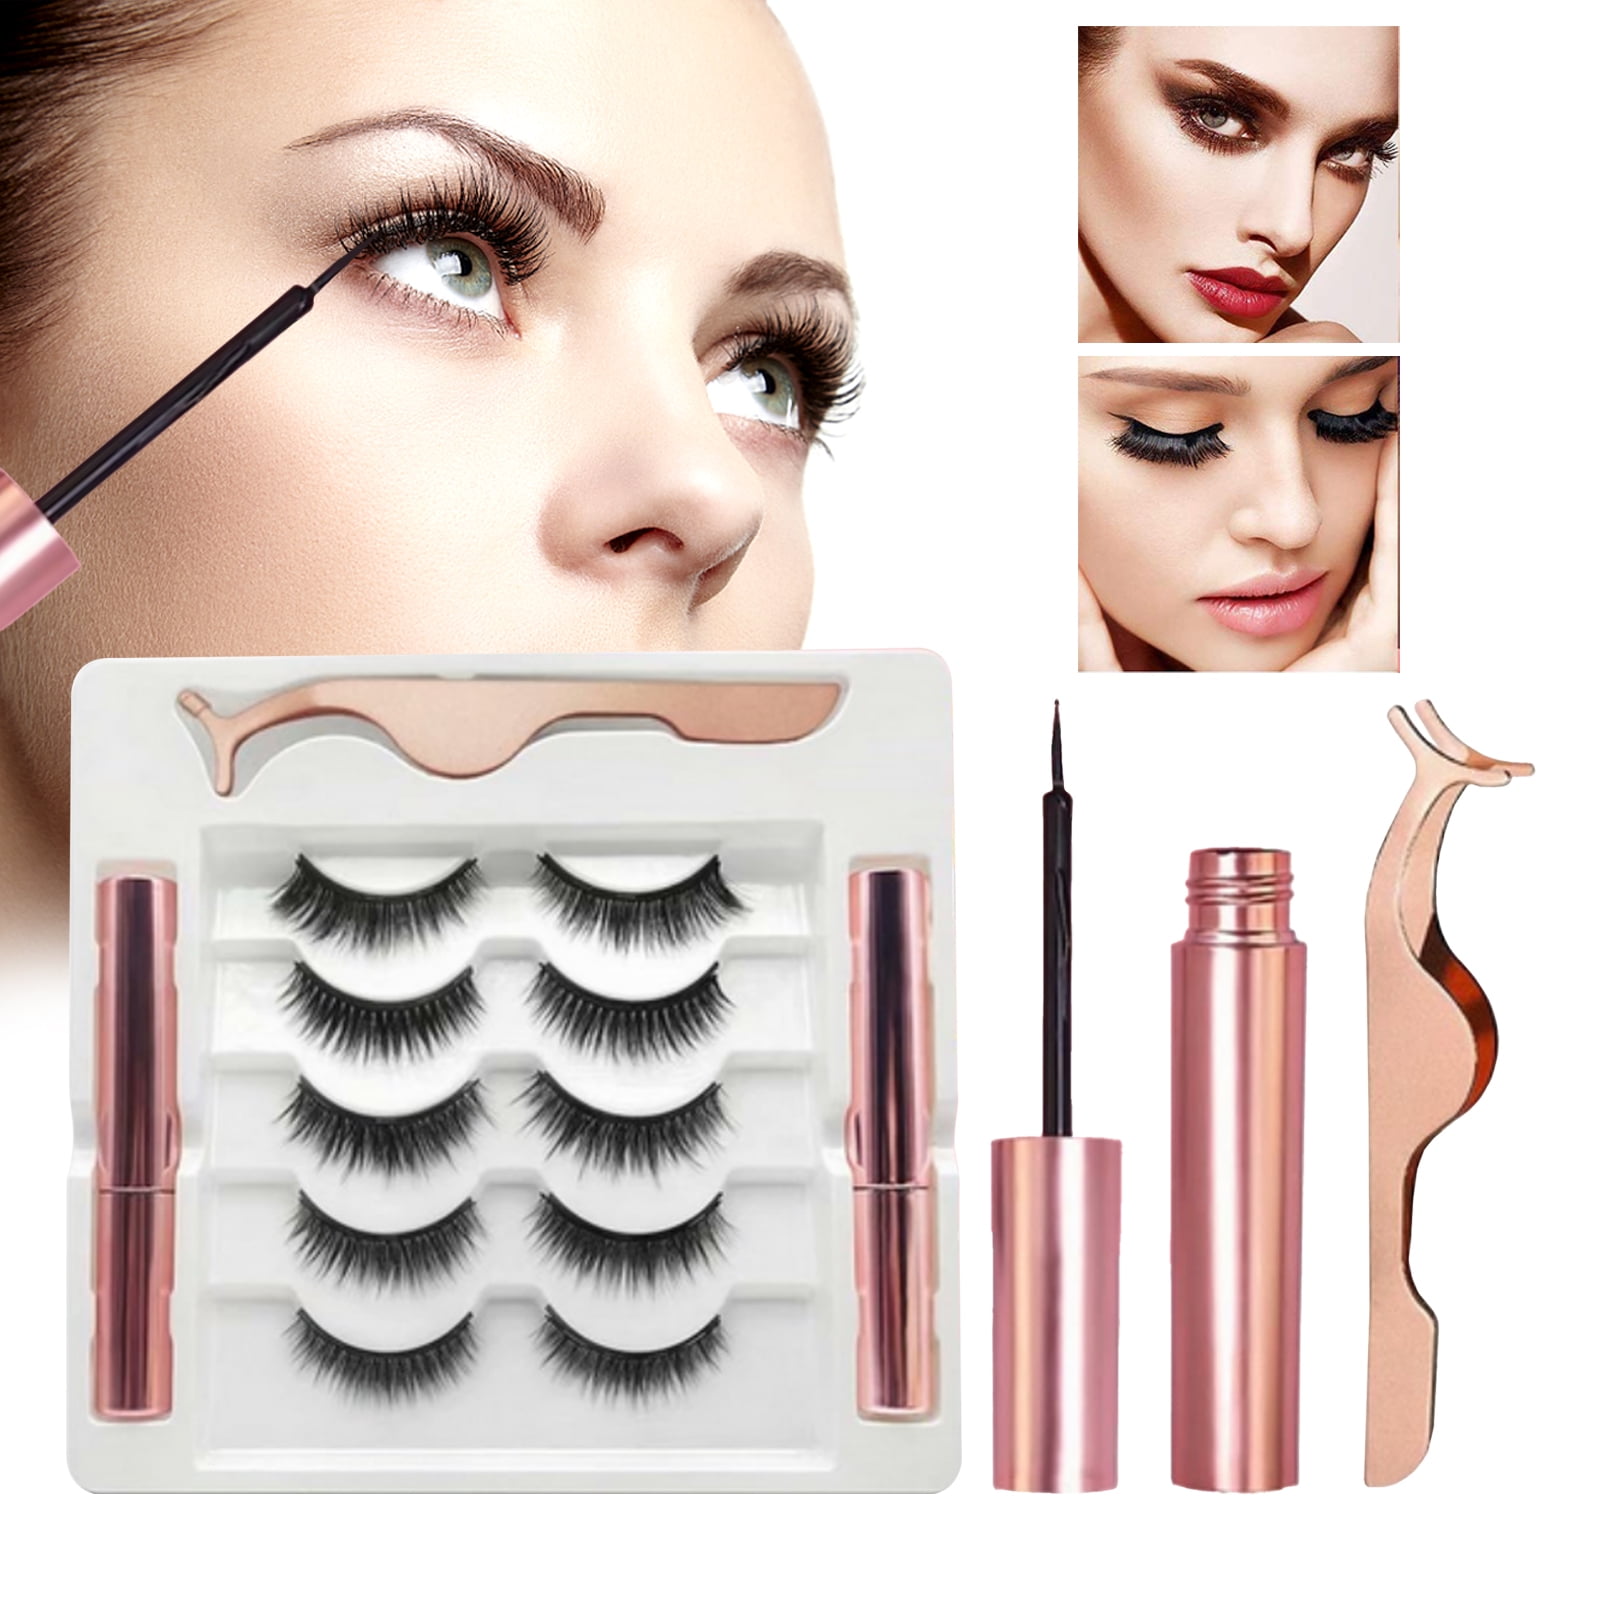 Cosprof Magnetic Eyelashes 5 Pairs Kit With Eyeliner Reusable Magnetic Lashes